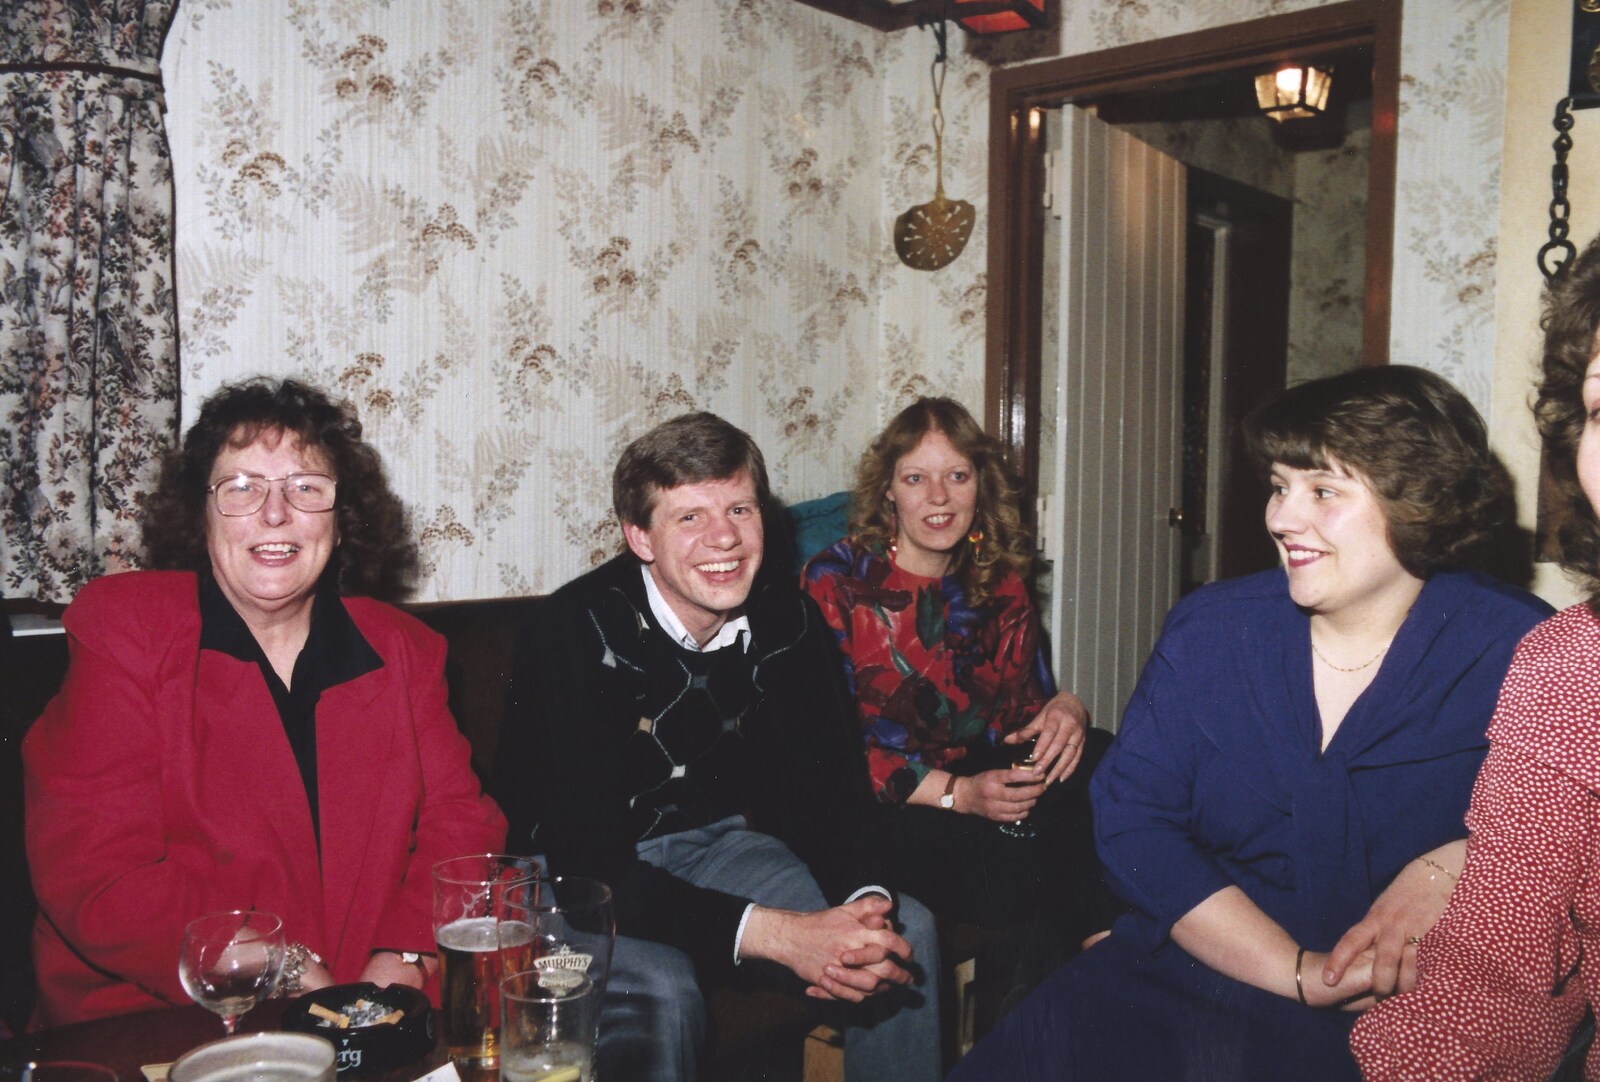 BPCC Printec Reunion at The Brome Swan, Suffolk - 20th February 1991: Beryl, Steve-o, Big Sue and Wendy